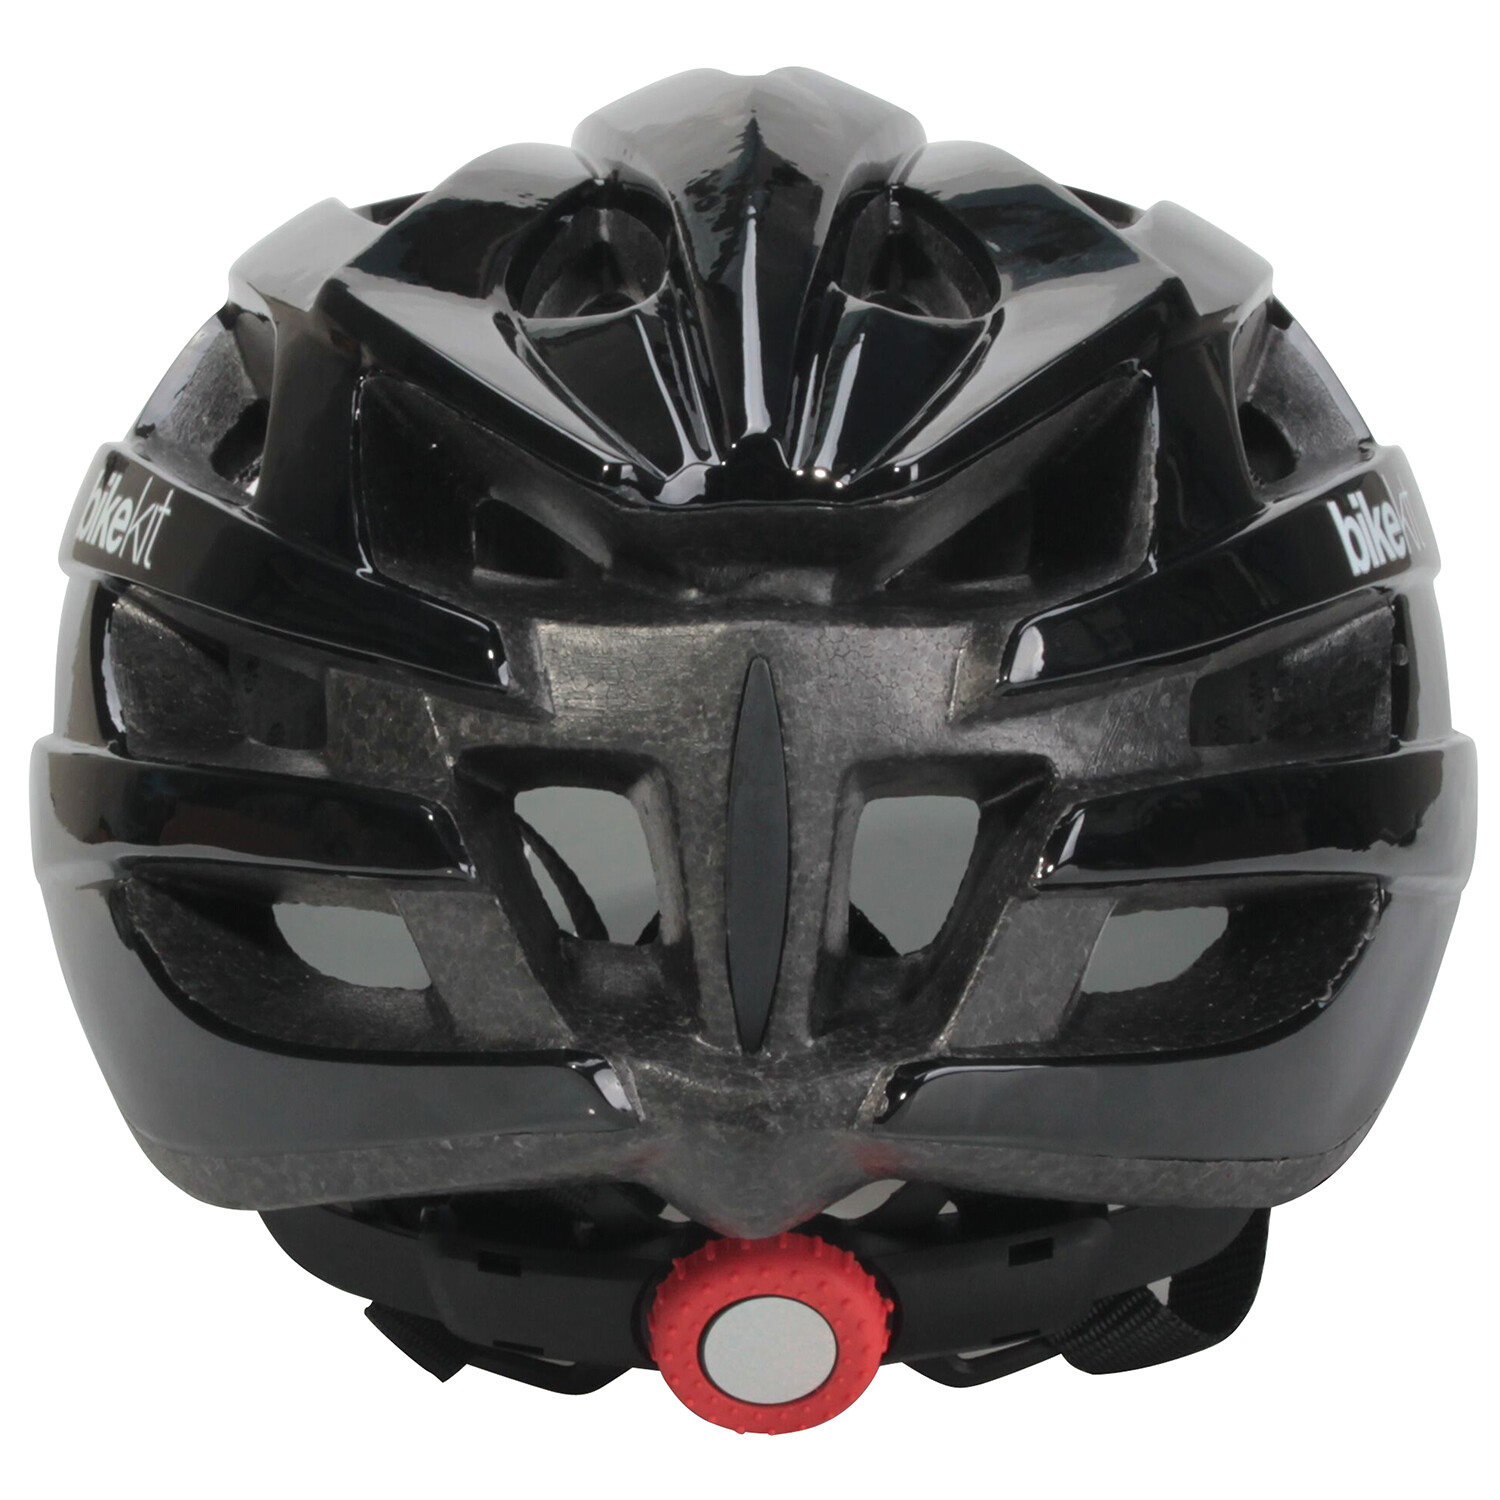 Bike Helmet With Lens Image 4